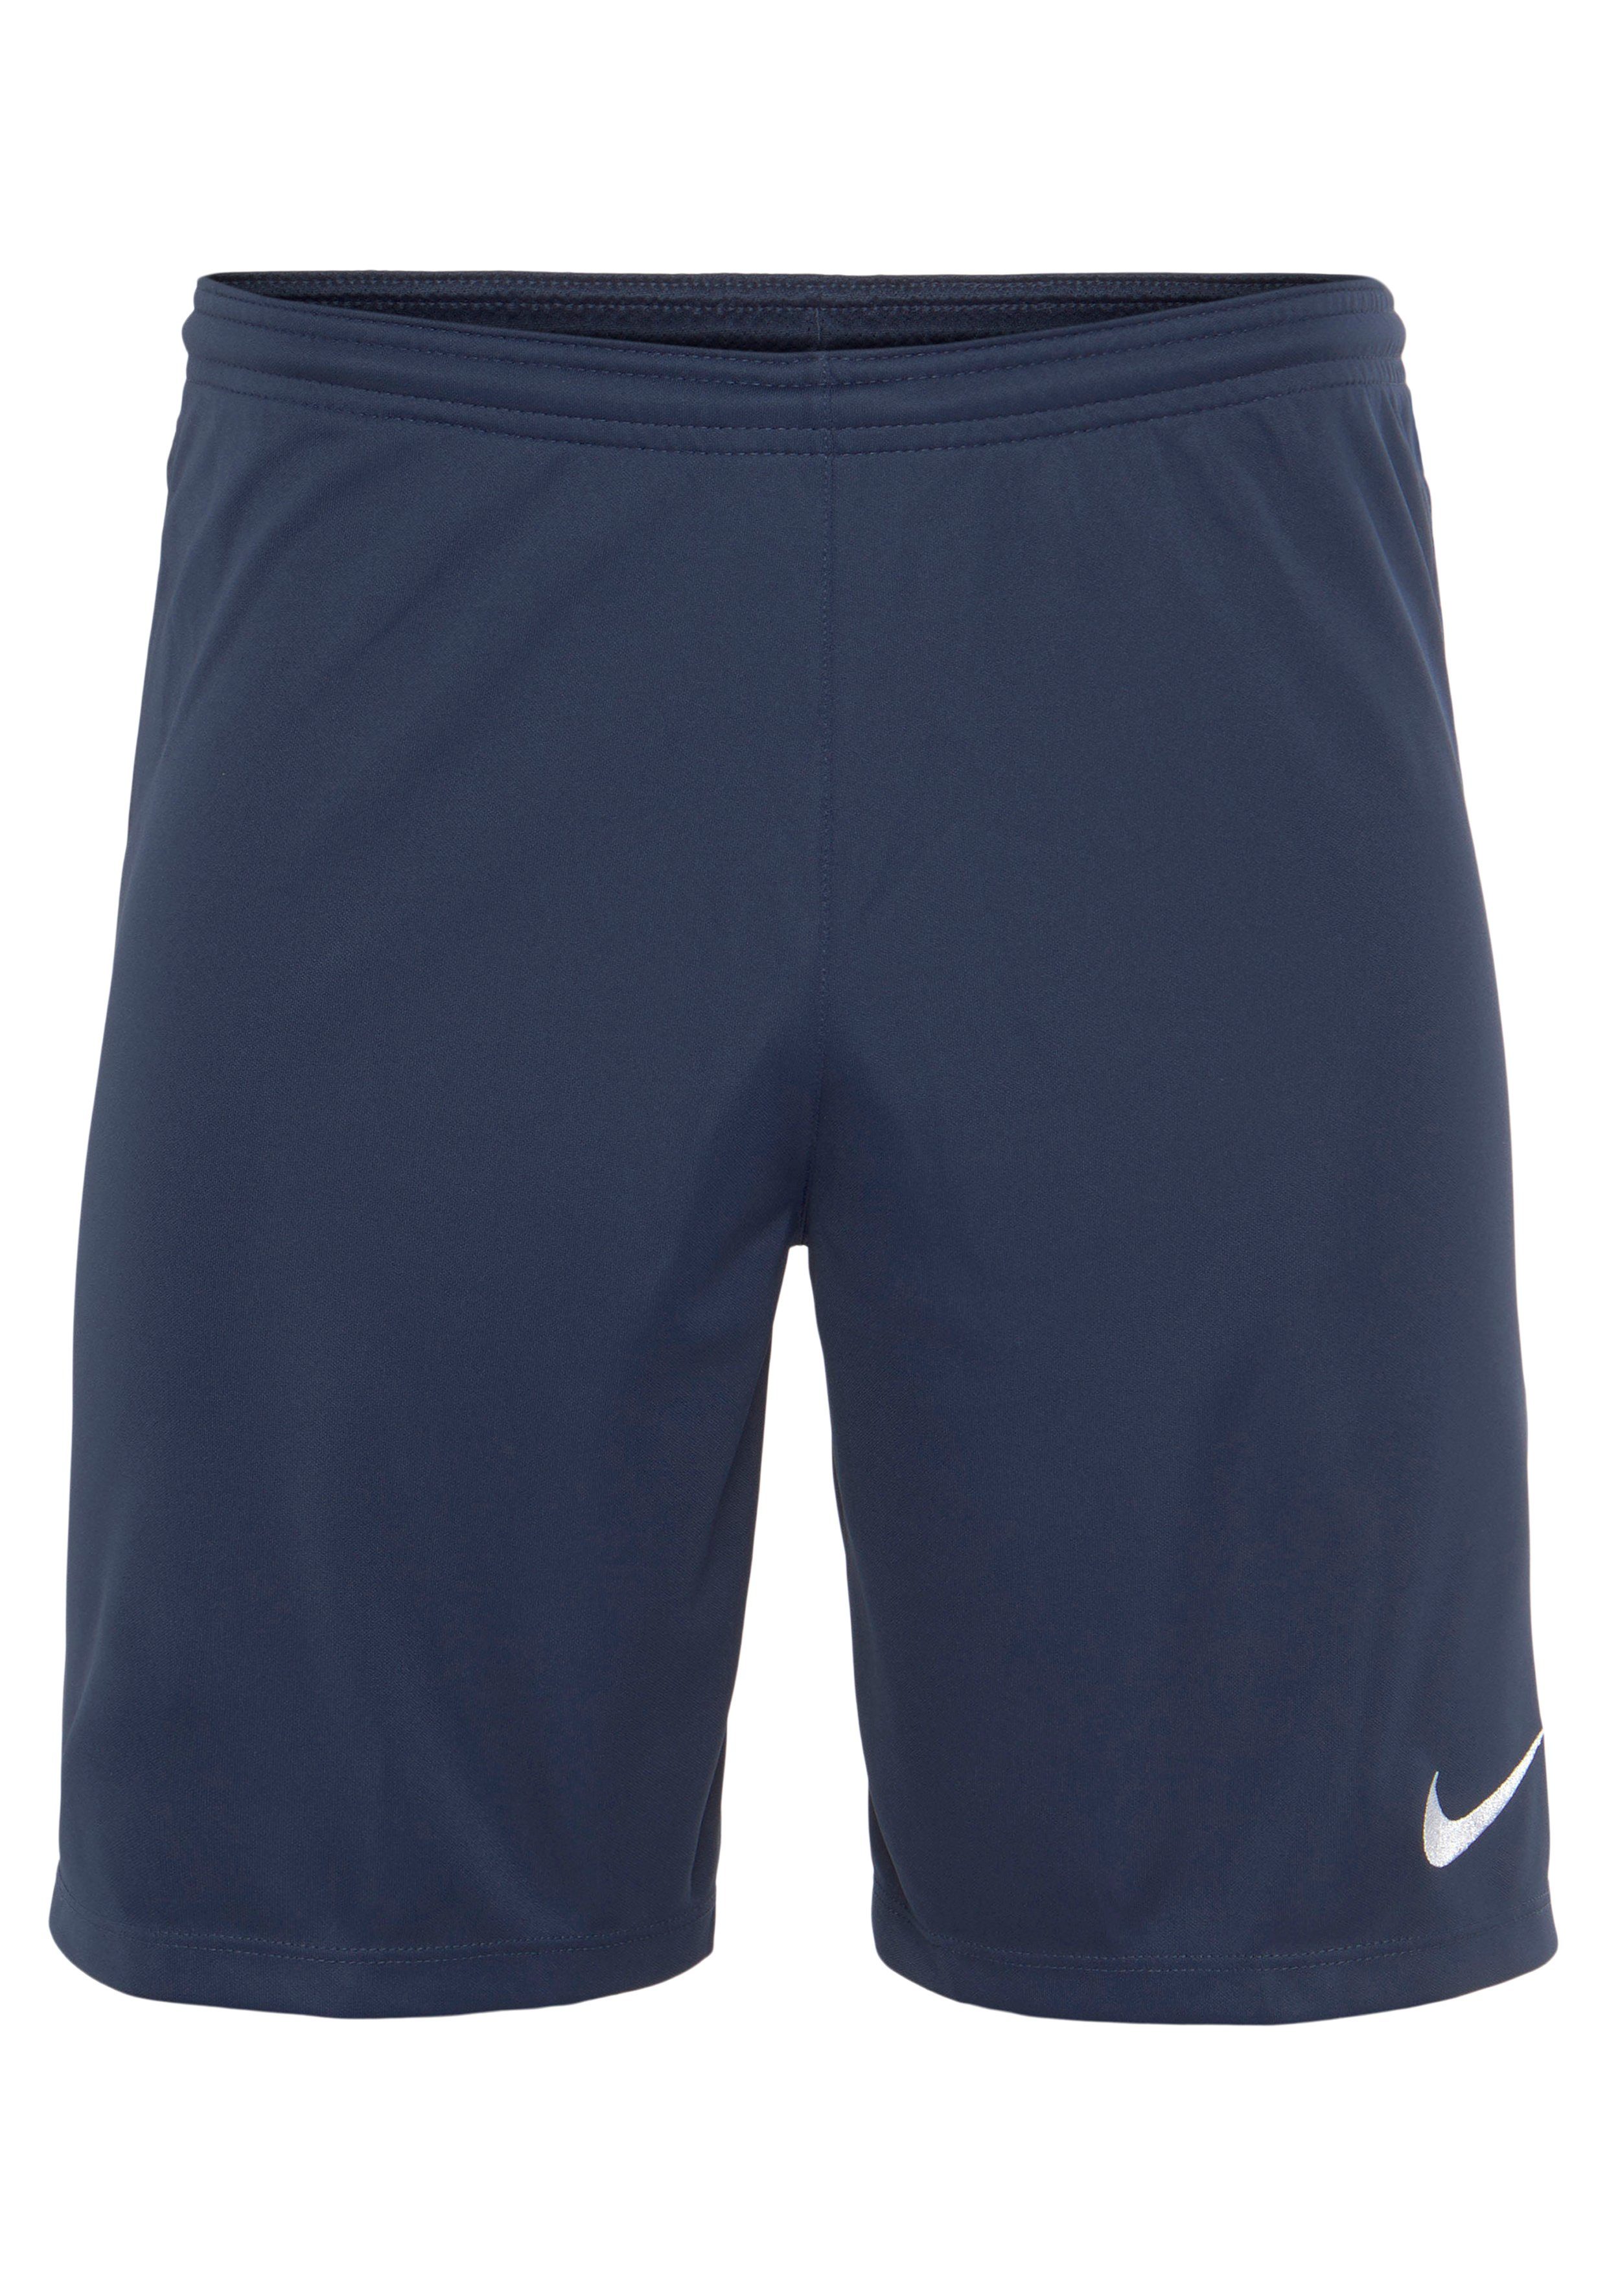 Shorts Nike League Short Knit Nike navy